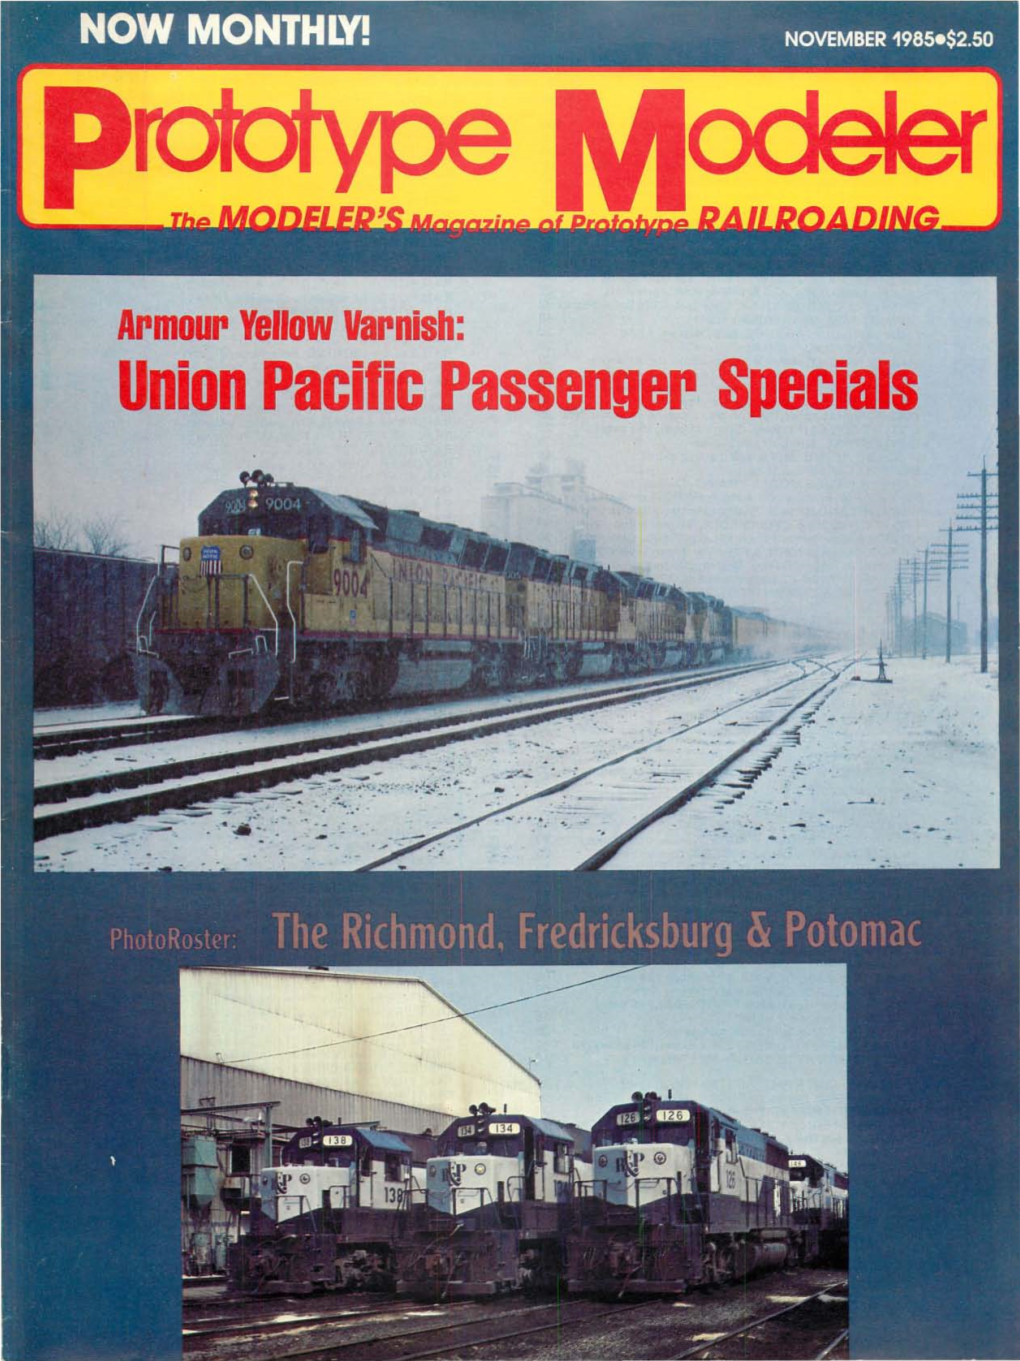 Union Pacific Passenger Specials